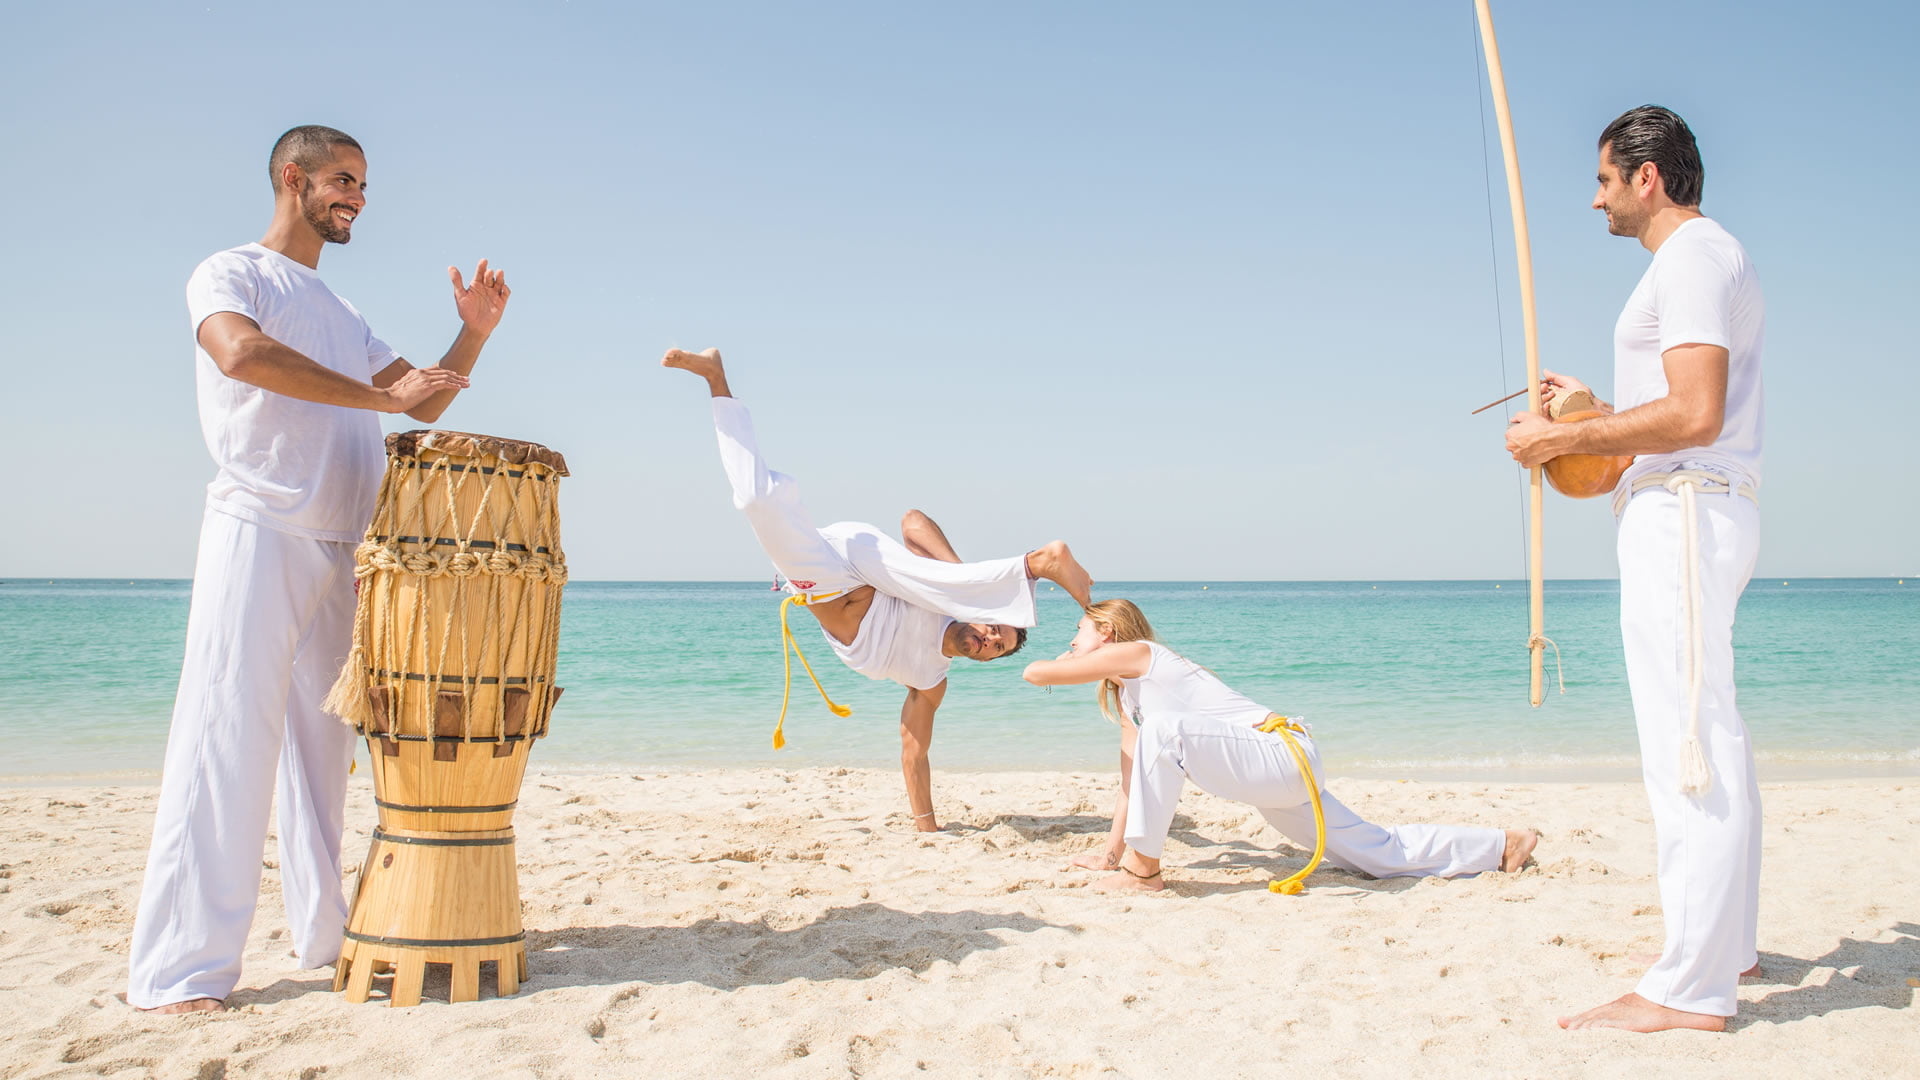 Capoeira, Capoeira clothing, For practicing capoeira, Traditional attire, 1920x1080 Full HD Desktop